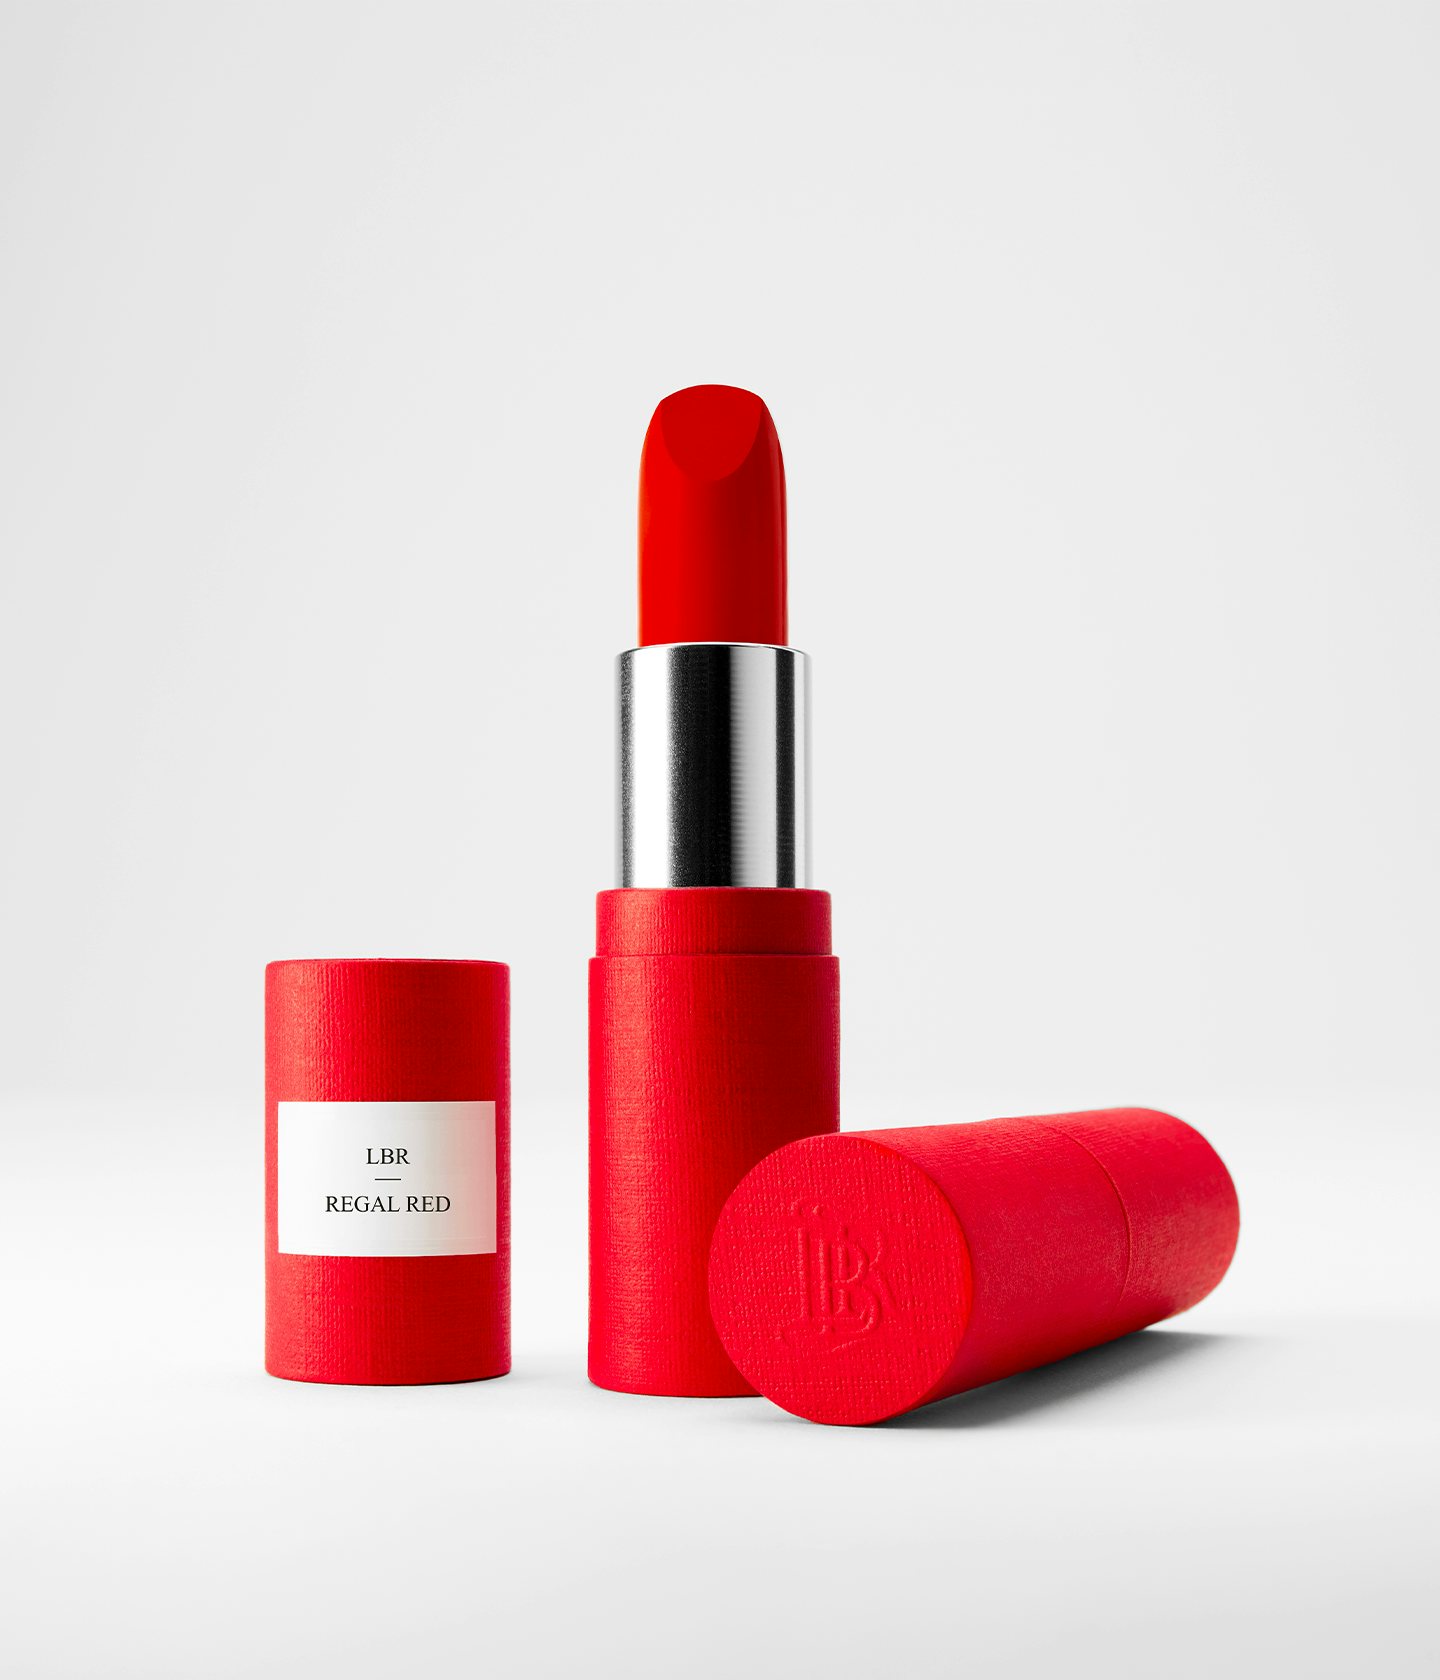 La bouche rouge Regal Red lipstick in the red paper case